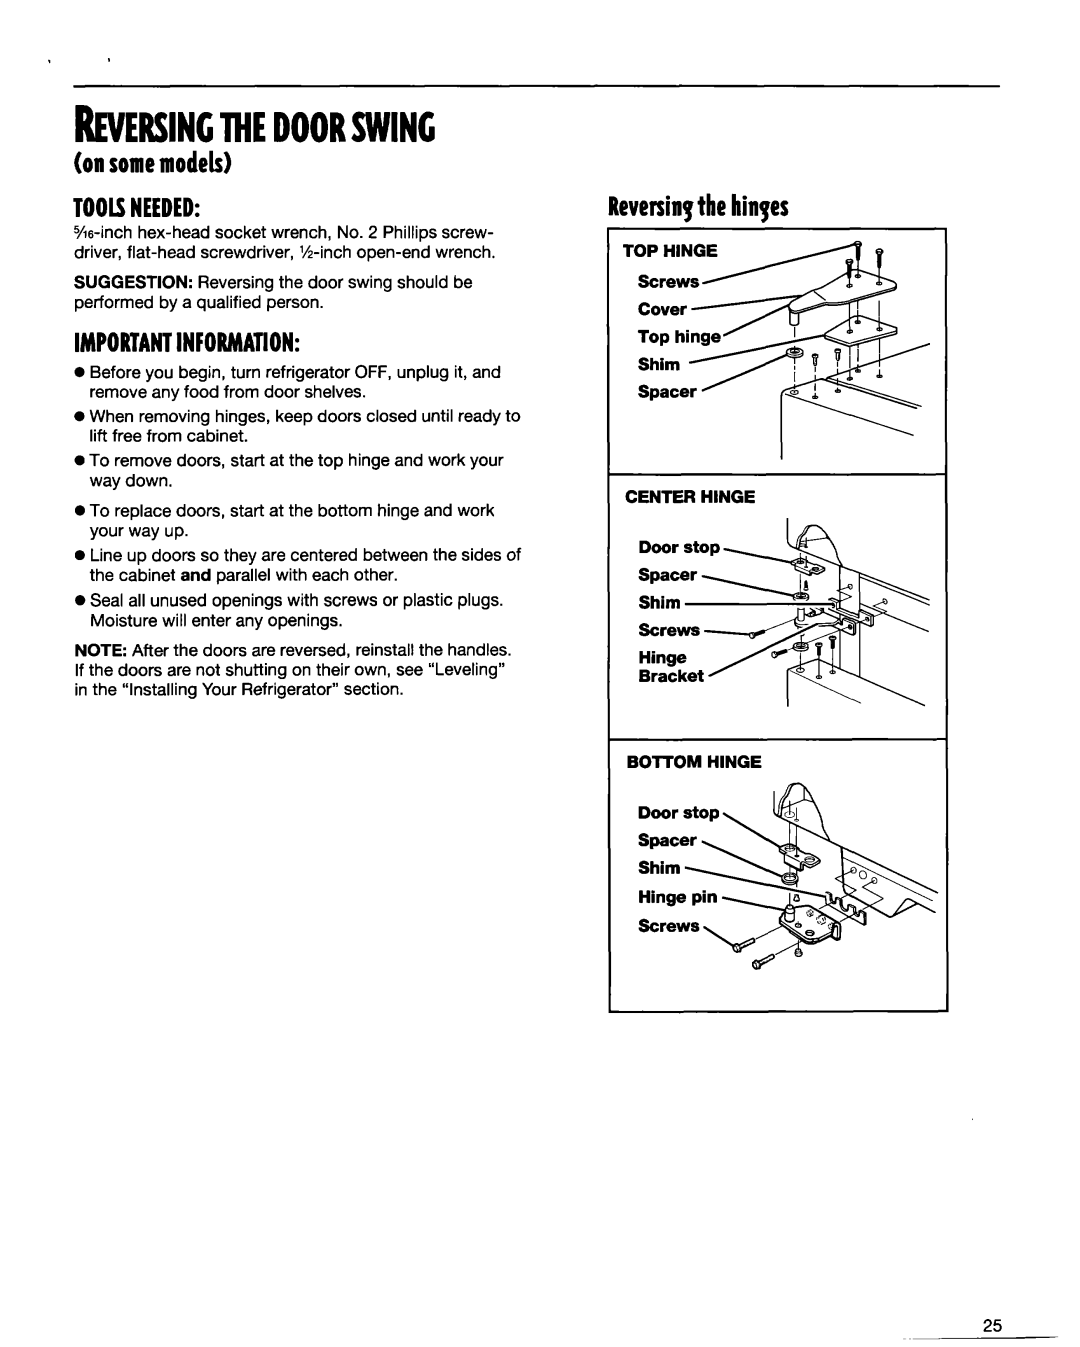 Whirlpool RT14BKXFN00 manual on somemodels TOOLSNEEDED, Importantinformation, Reveninpthe hinpes 